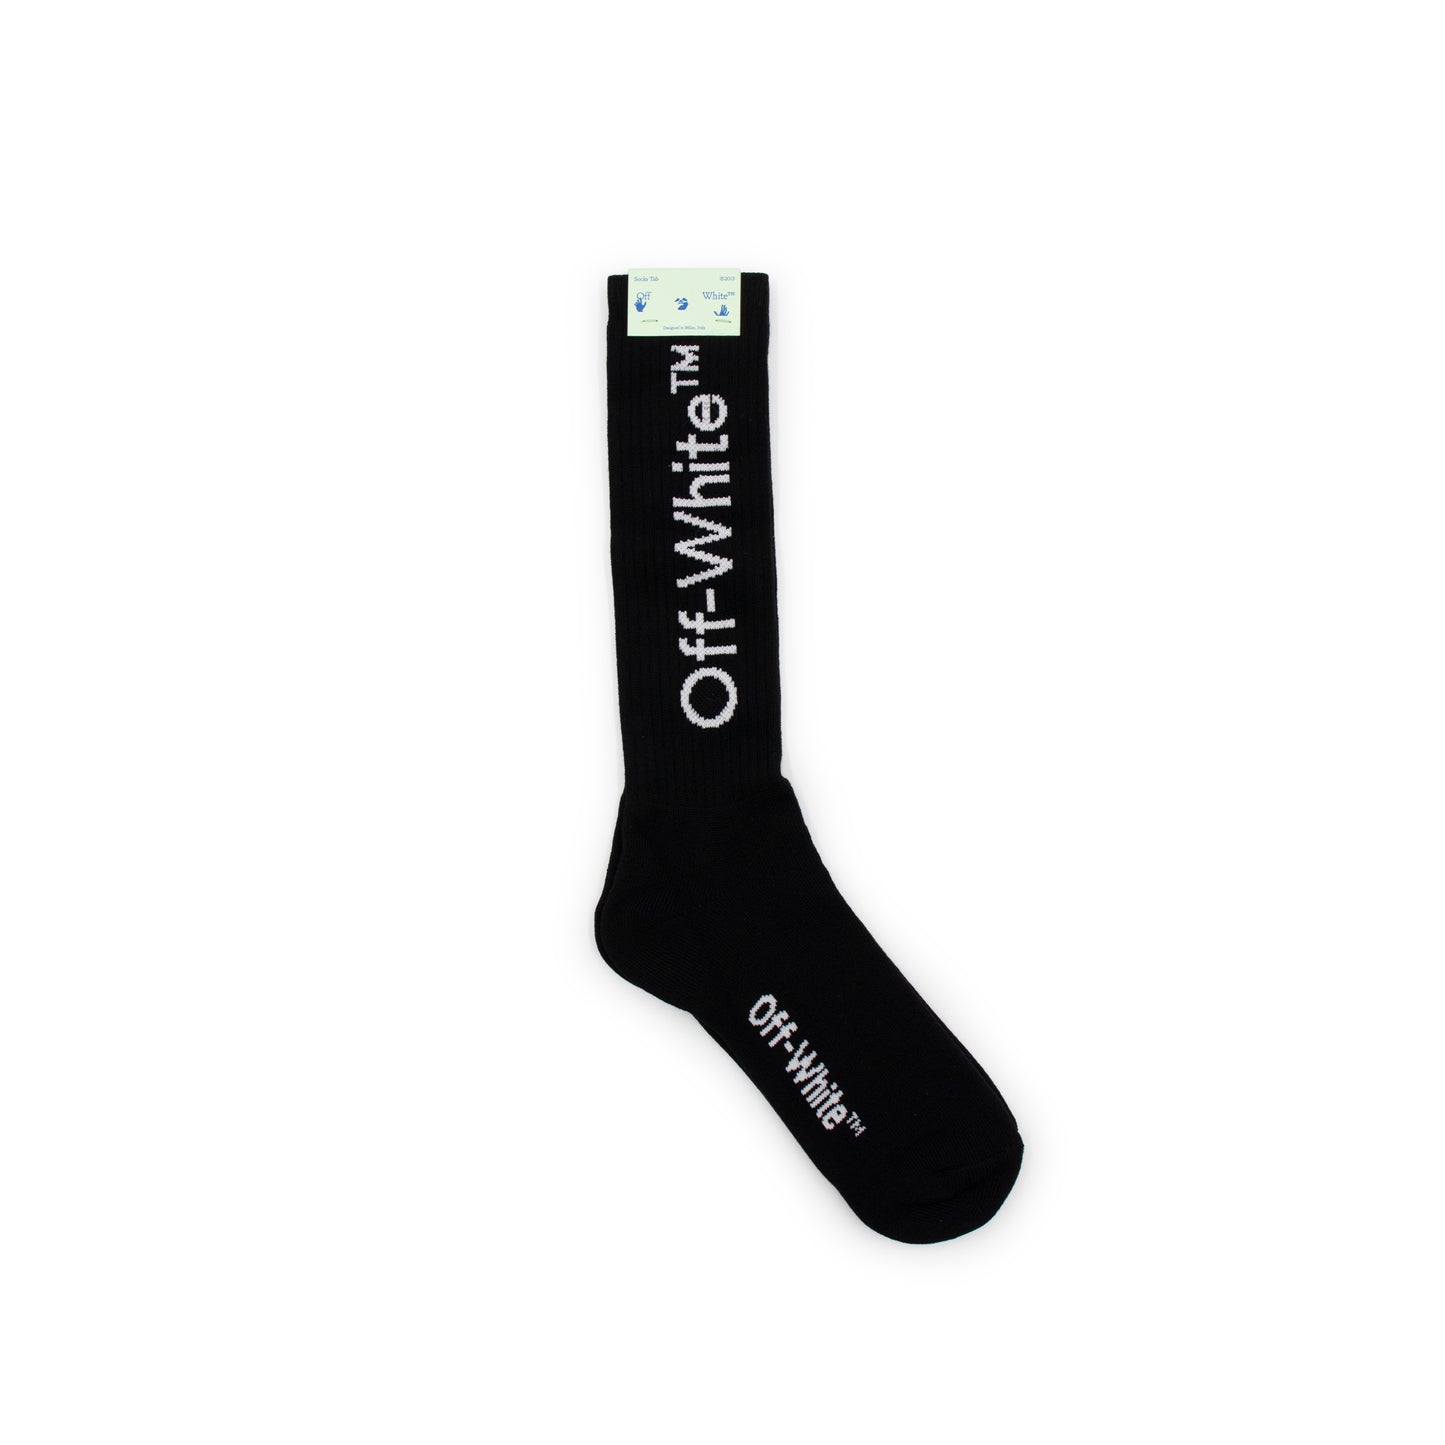 Classic Mid Length Arrows Socks in Black